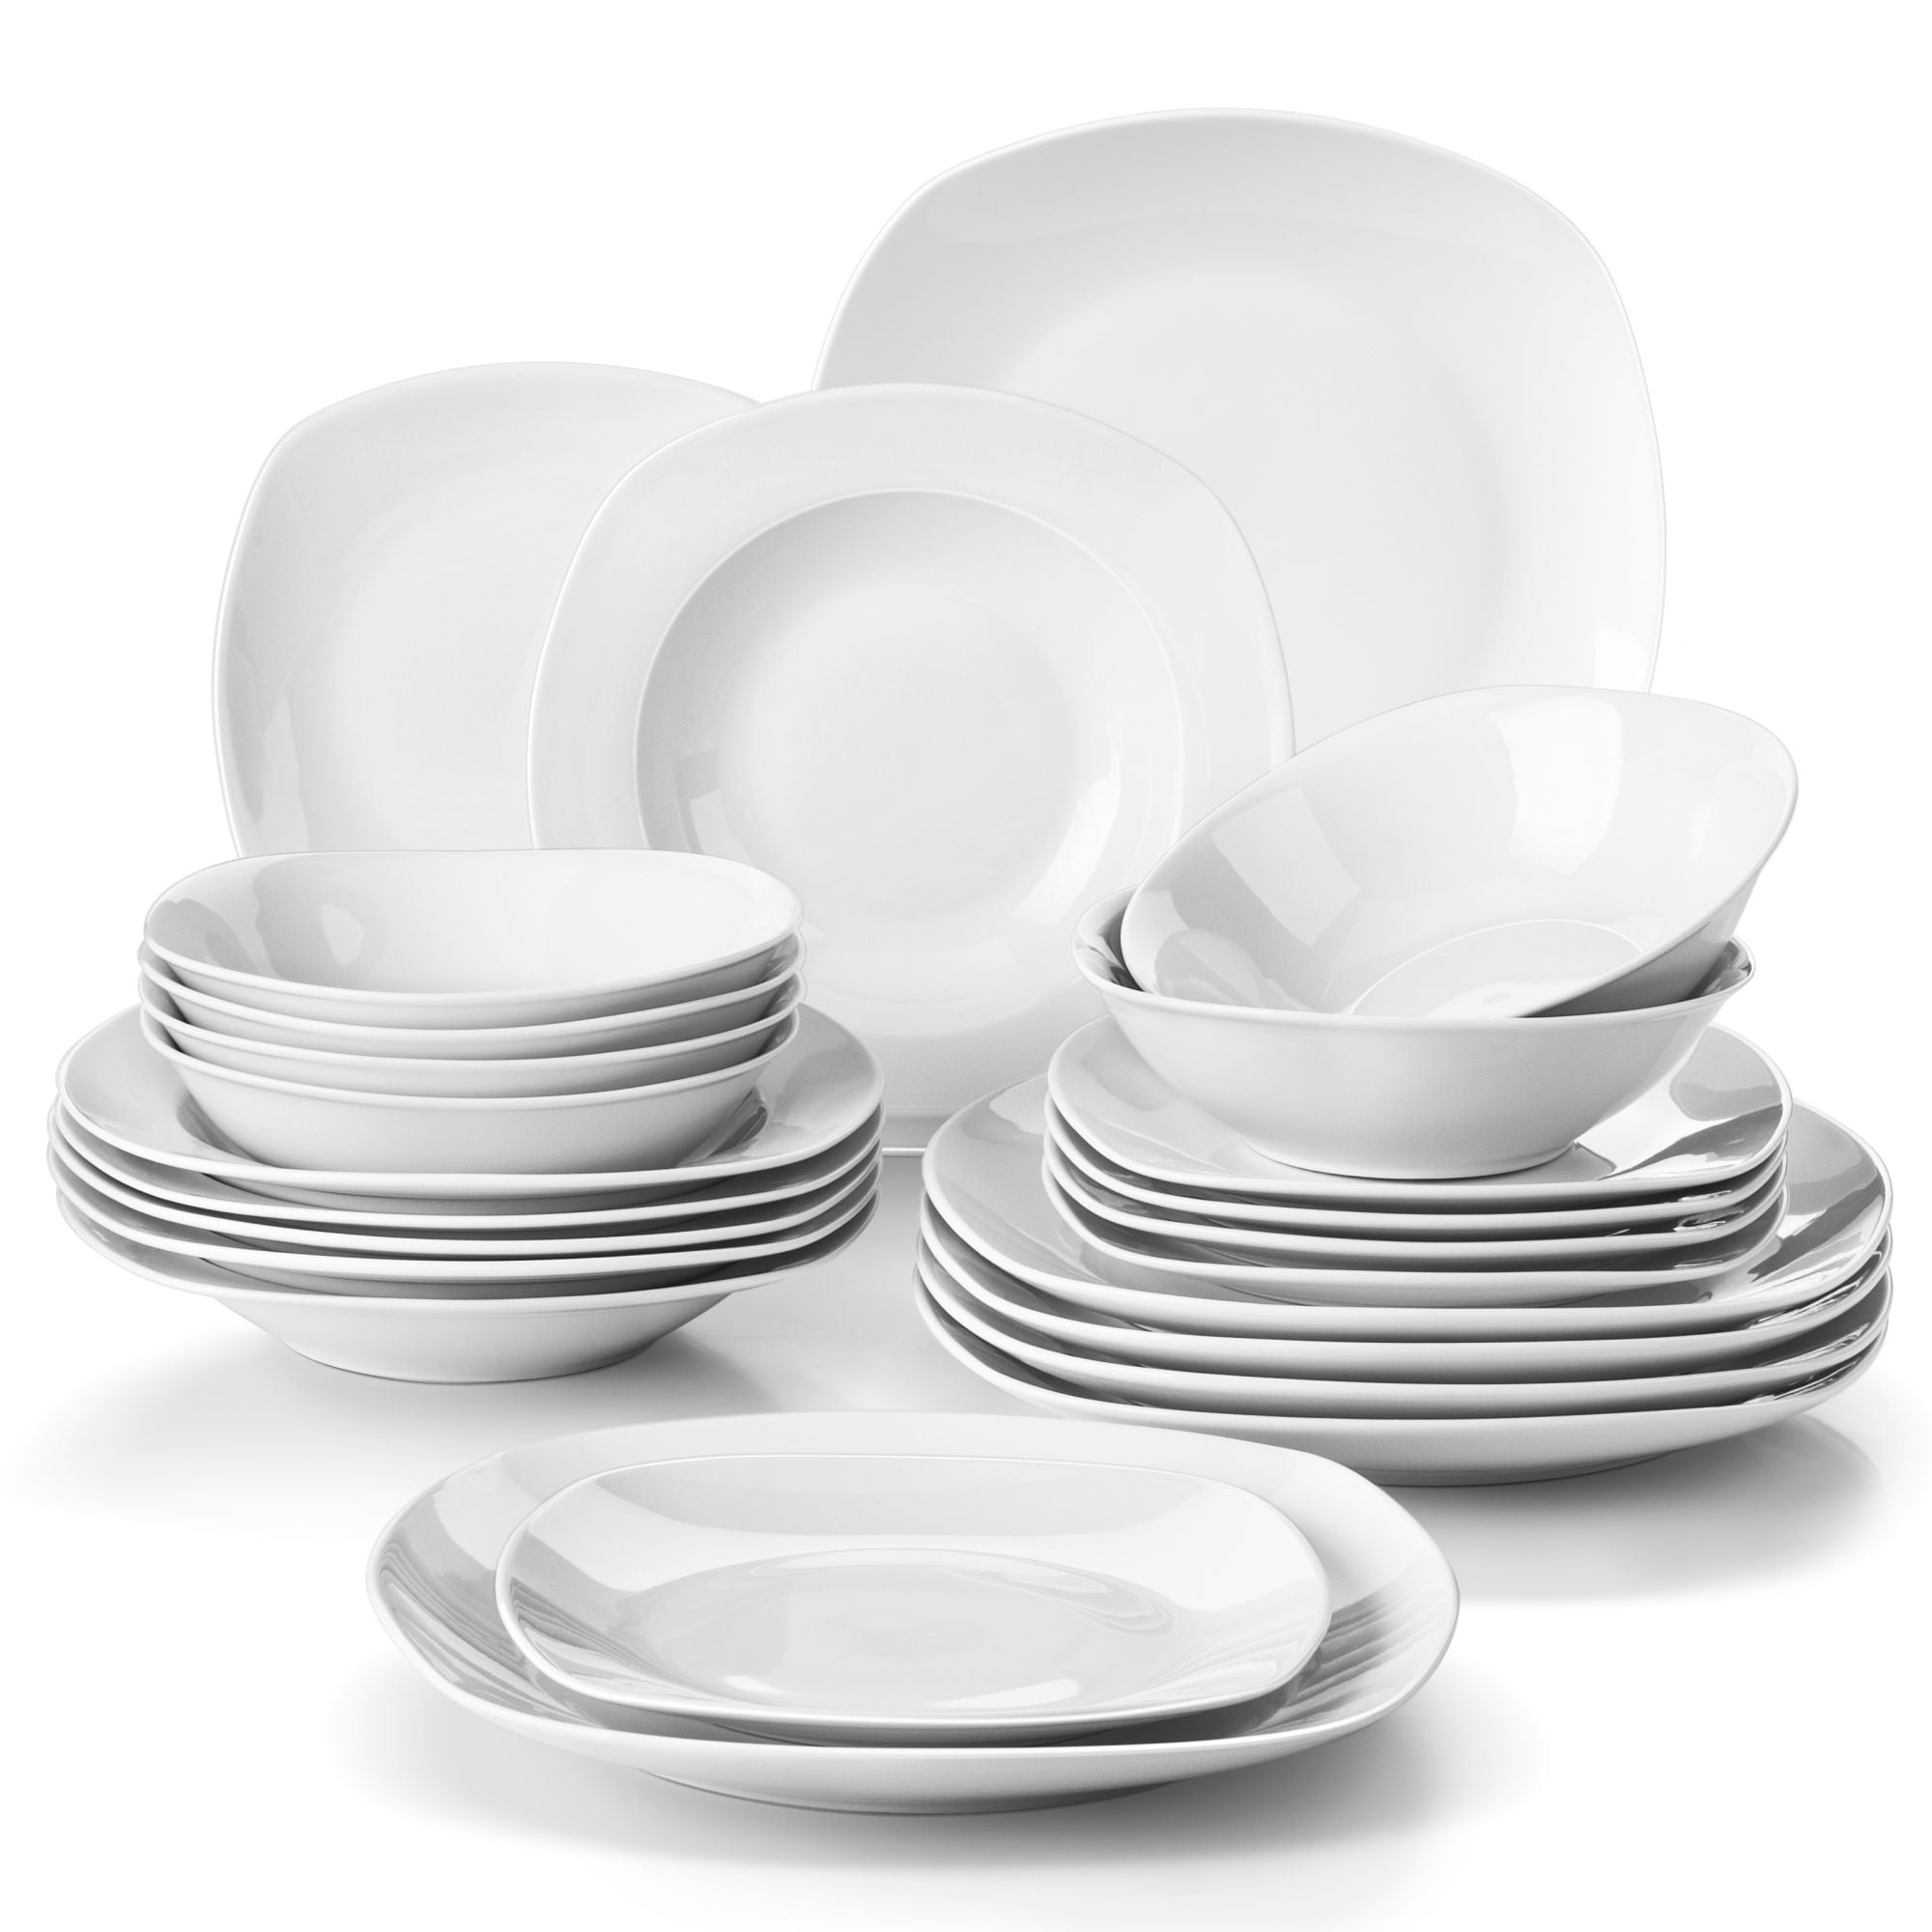 MALACASA, Series Elisa, 24-Piece Porcelain Dinnerware Set, Ivory White  Dinner Set, Service for 6